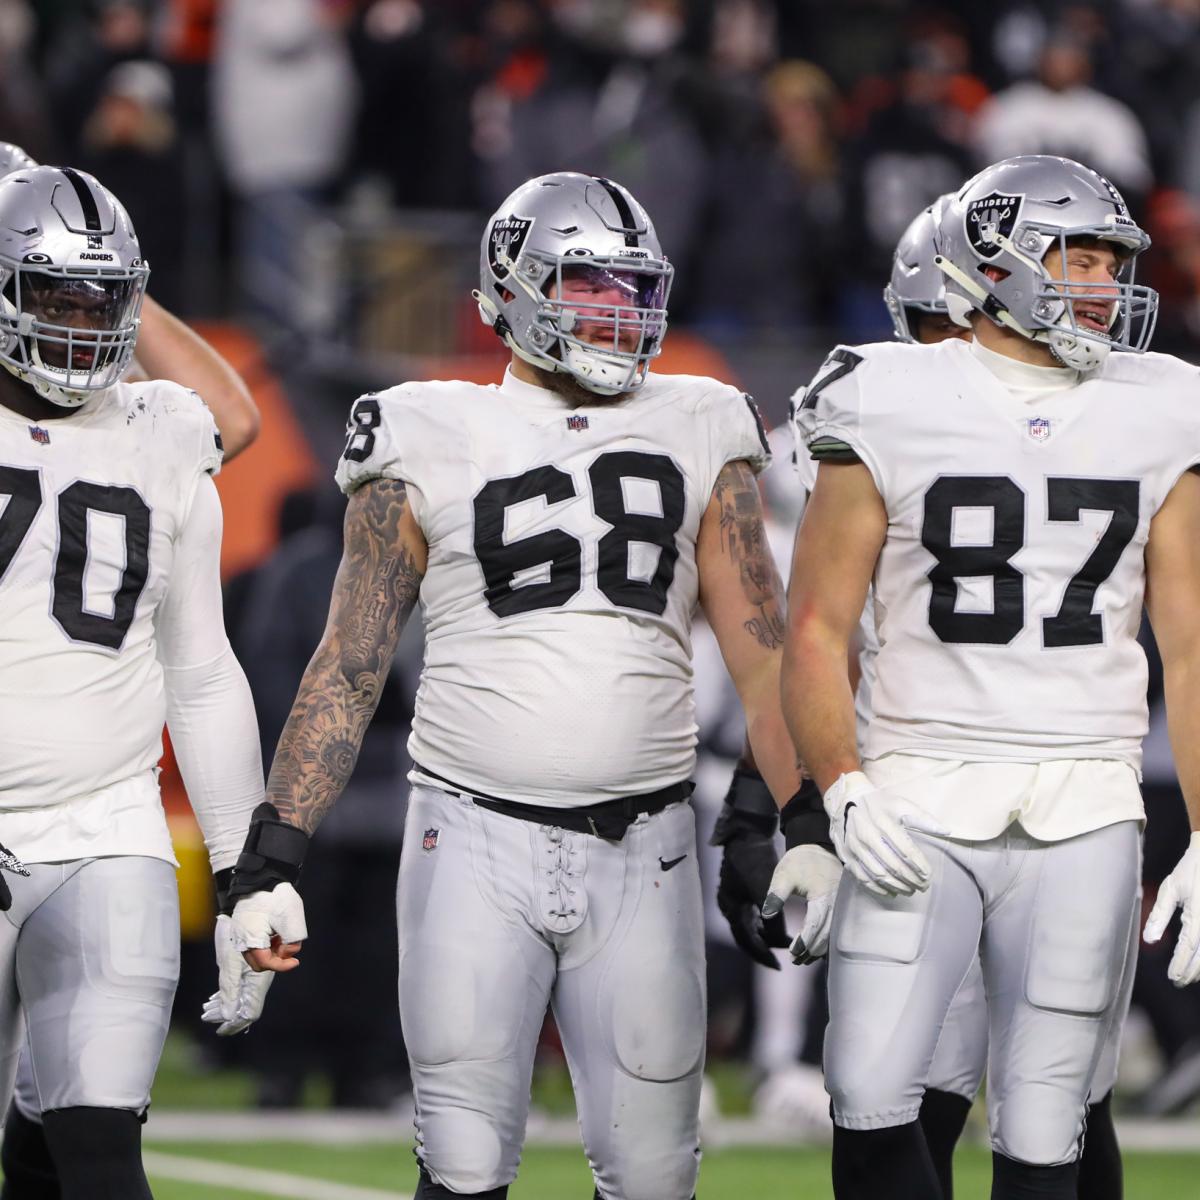 Raiders’ Position Battles to Watch Ahead of 2022 NFL Season